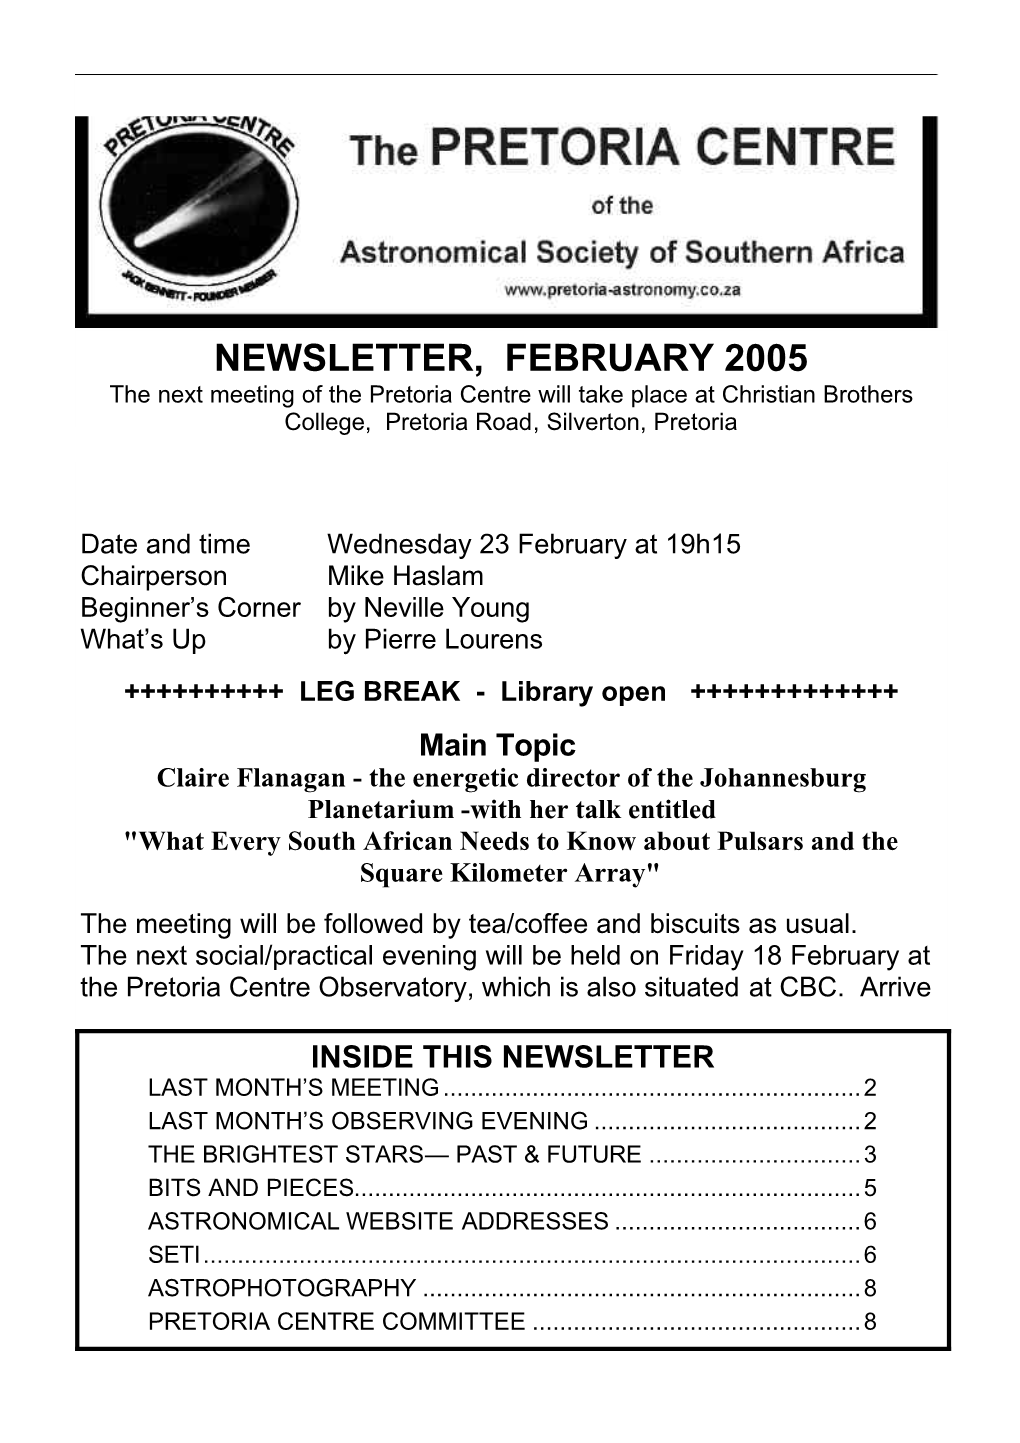 NEWSLETTER, FEBRUARY 2005 the Next Meeting of the Pretoria Centre Will Take Place at Christian Brothers College, Pretoria Road, Silverton, Pretoria